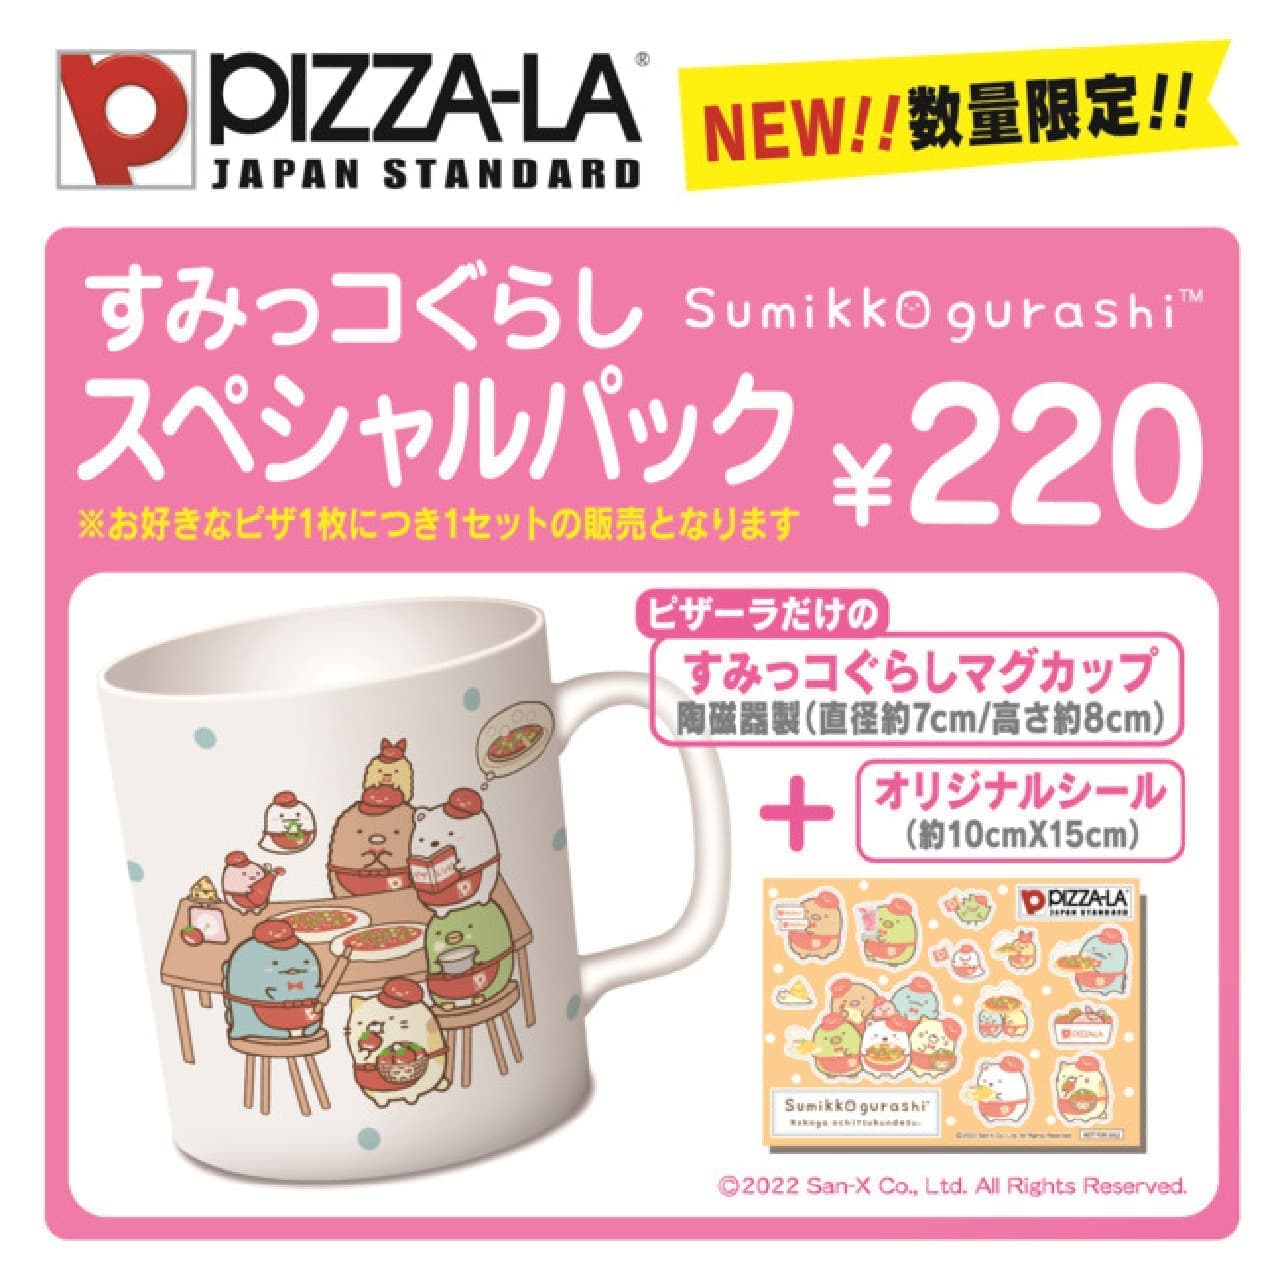 Pizarra Sumikko Gurashi Special Pack -- You can buy mugs and stickers! Shirokuma and Penguin? They make pizza!